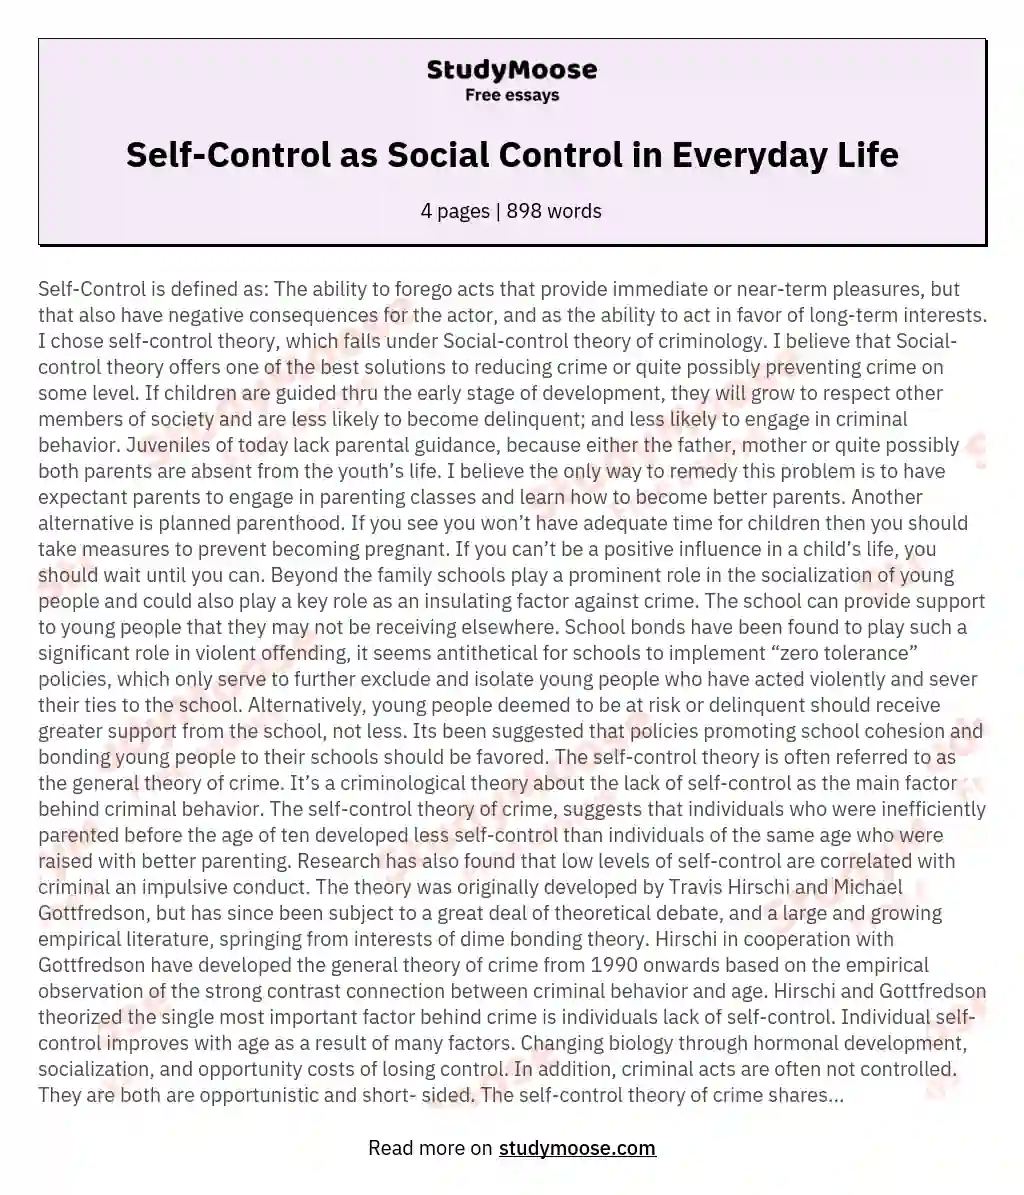 Self-Control as Social Control in Everyday Life essay